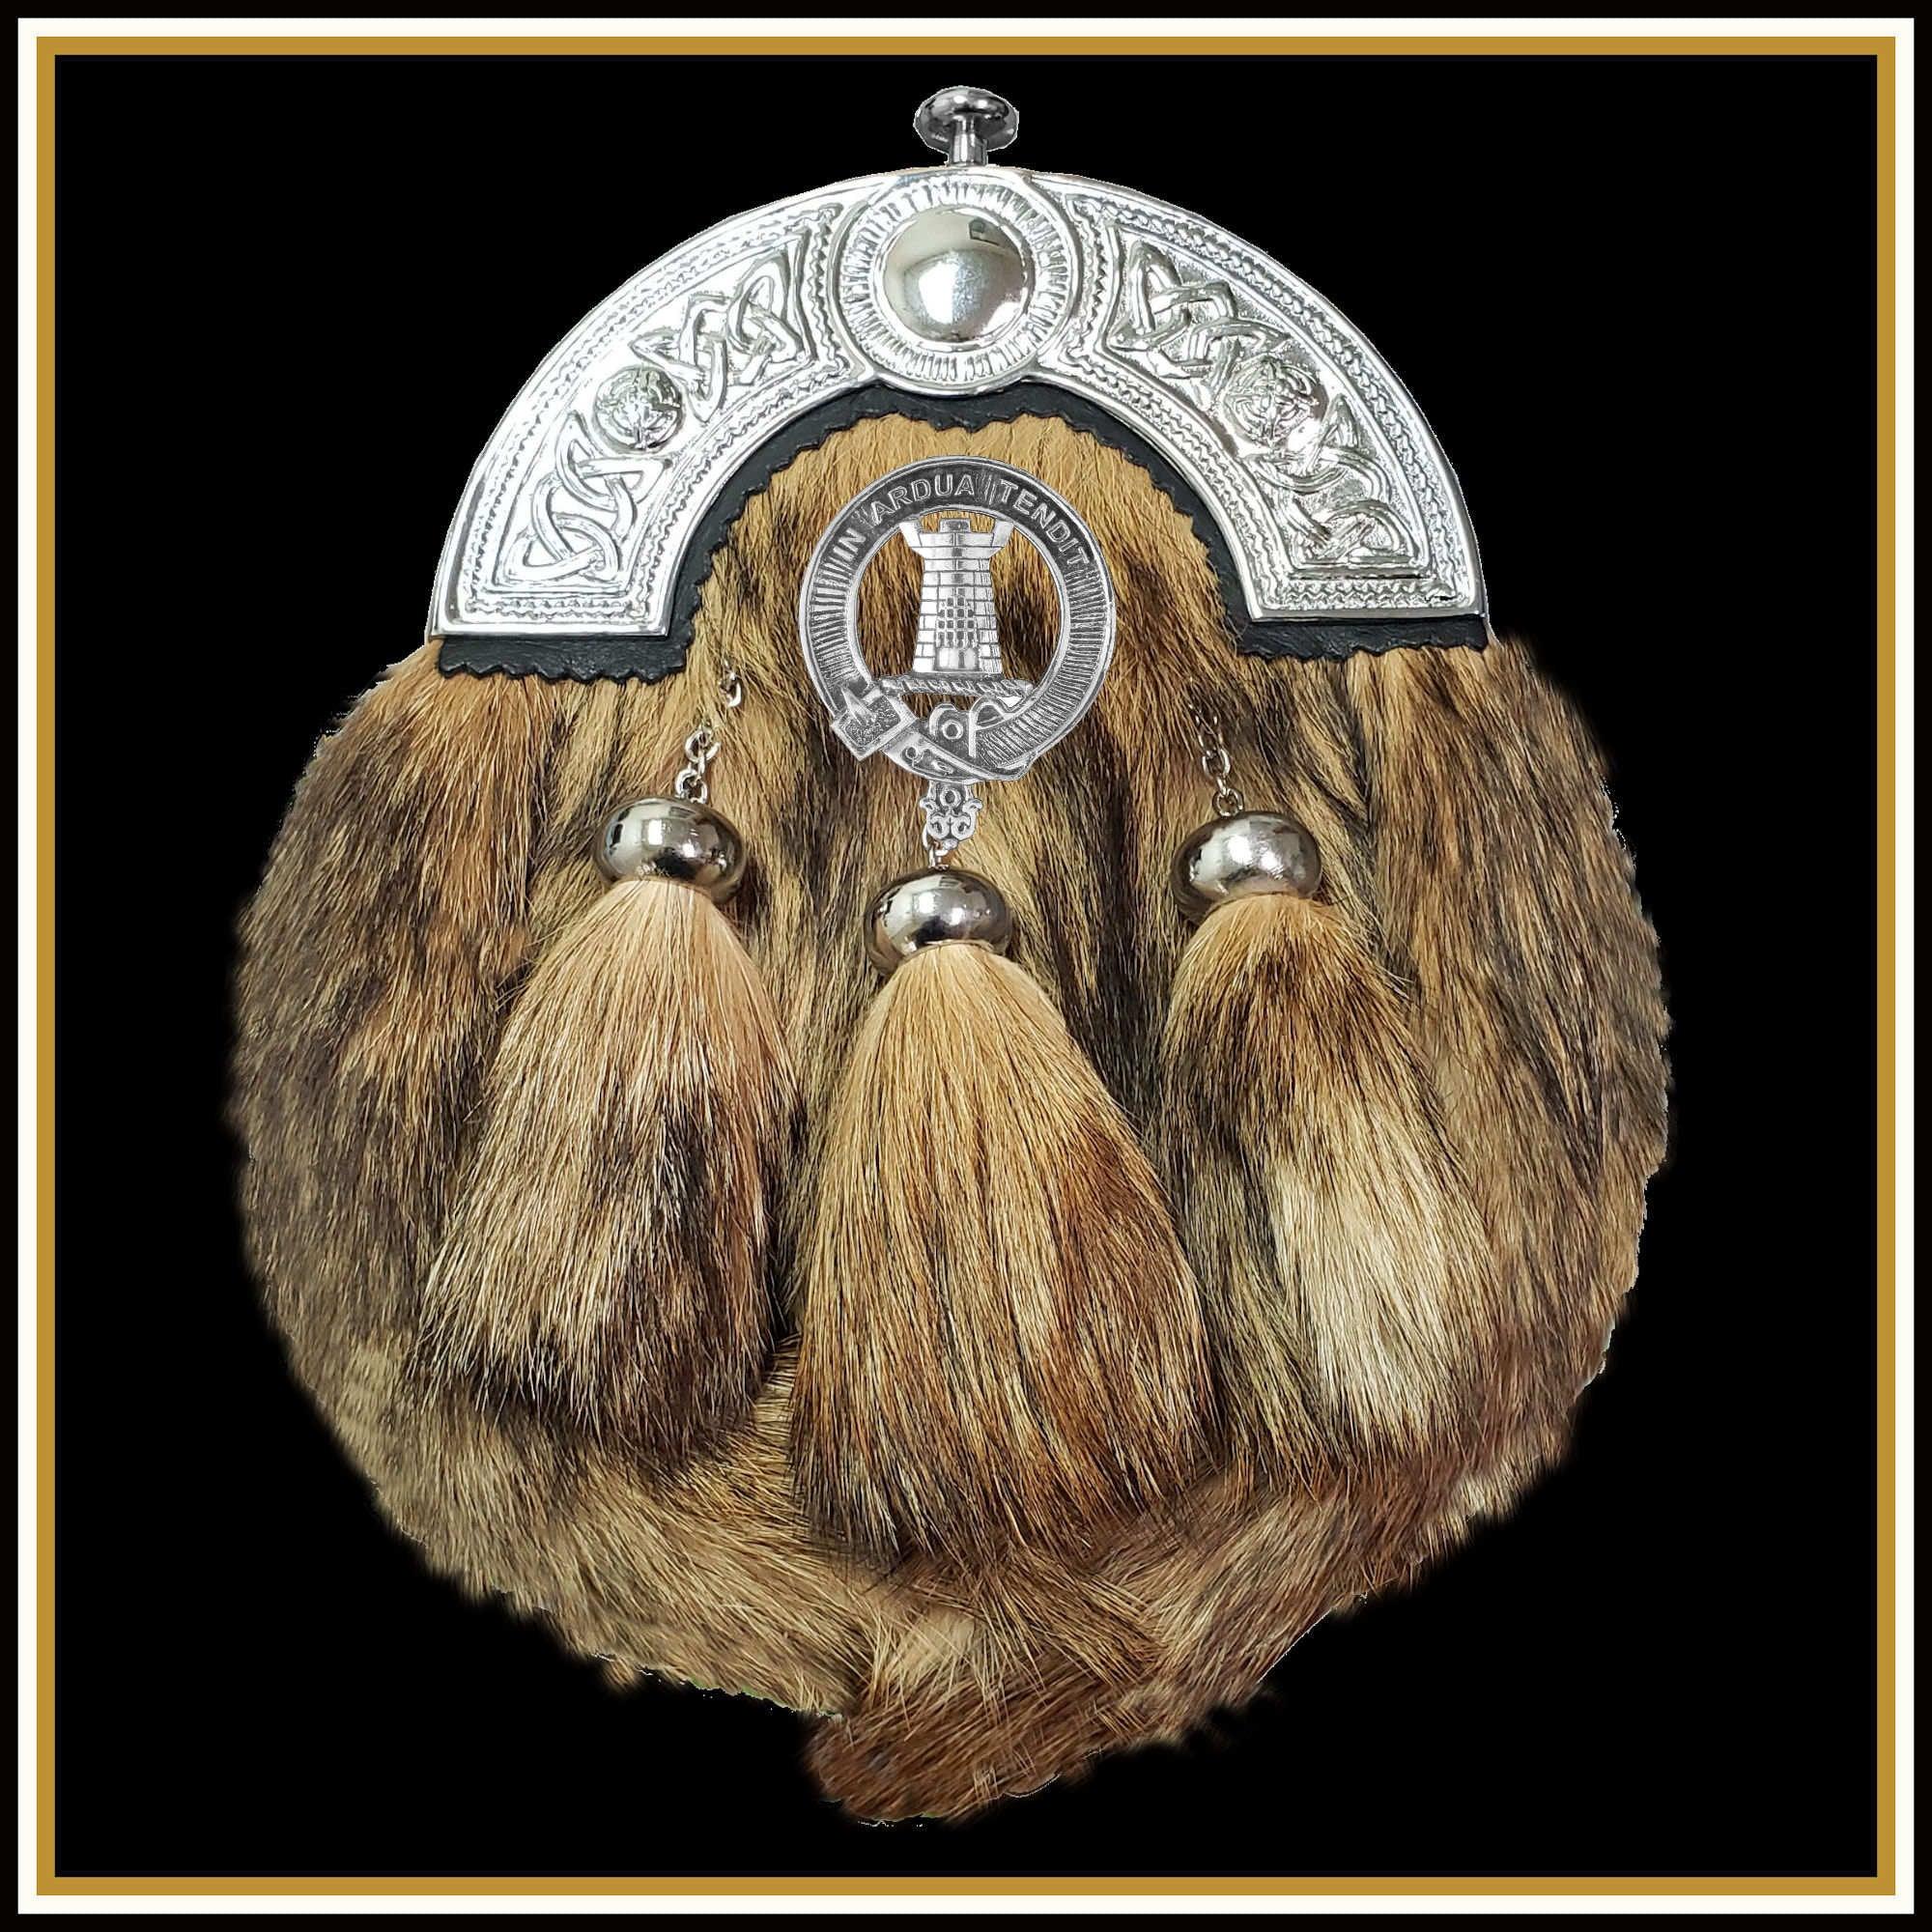 Malcolm Scottish Clan Crest Badge Dress Fur Sporran